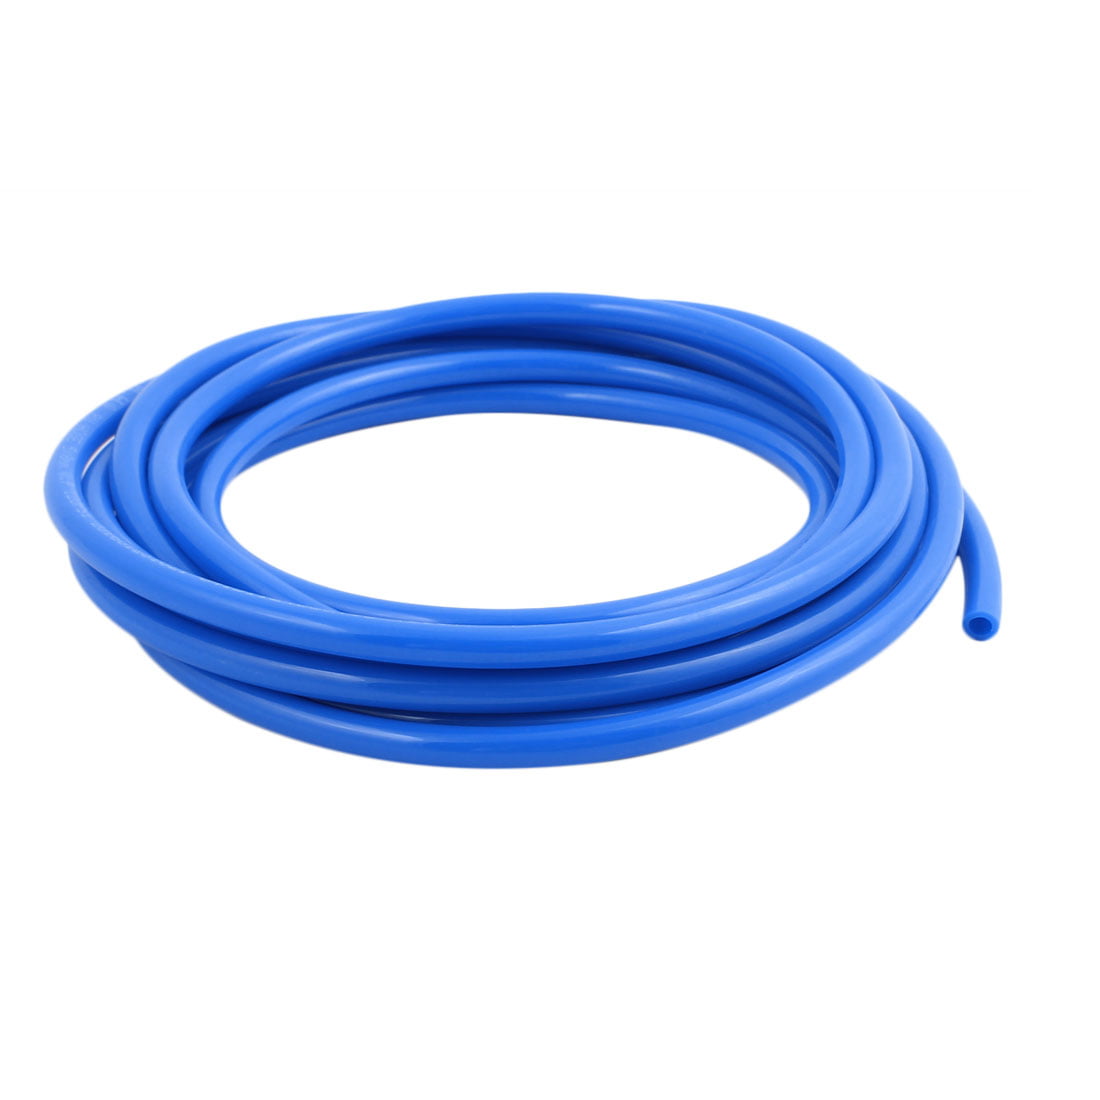 8mmx12mm Flexible Pneumatic Polyurethane PU Hose Pipe Tube Blue 5m Leng # 